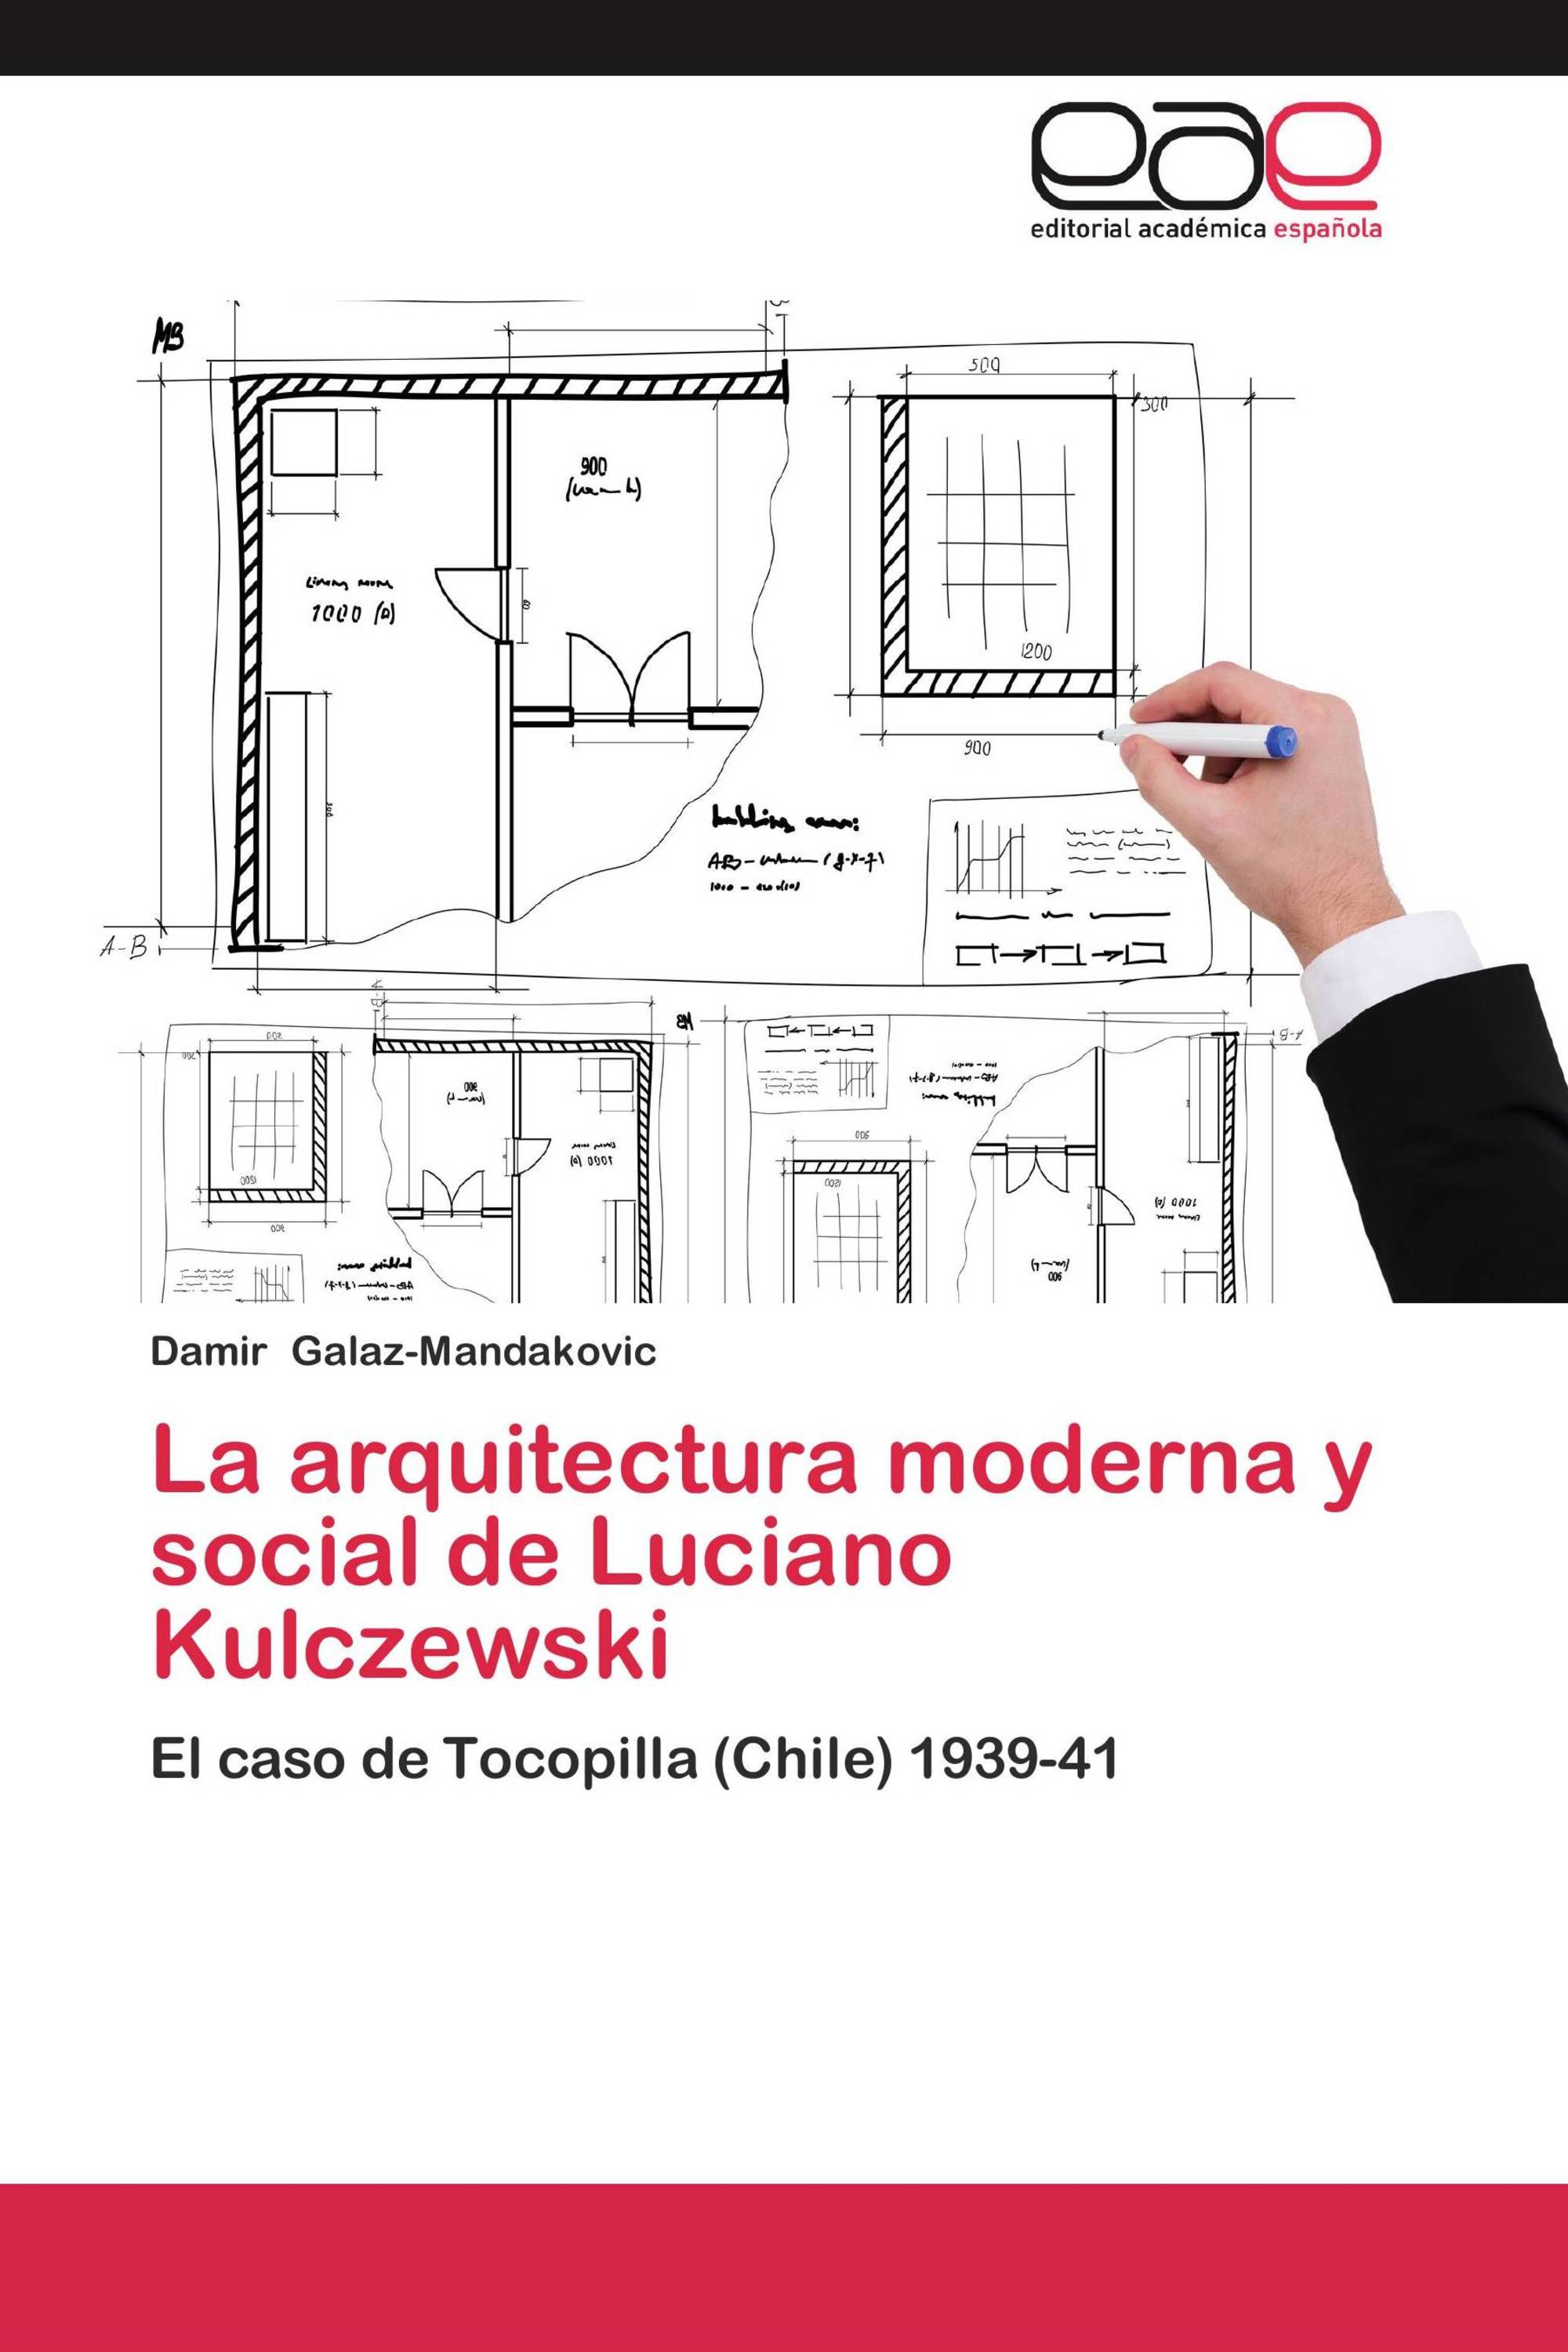 La arquitectura moderna y social de Luciano Kulczewski